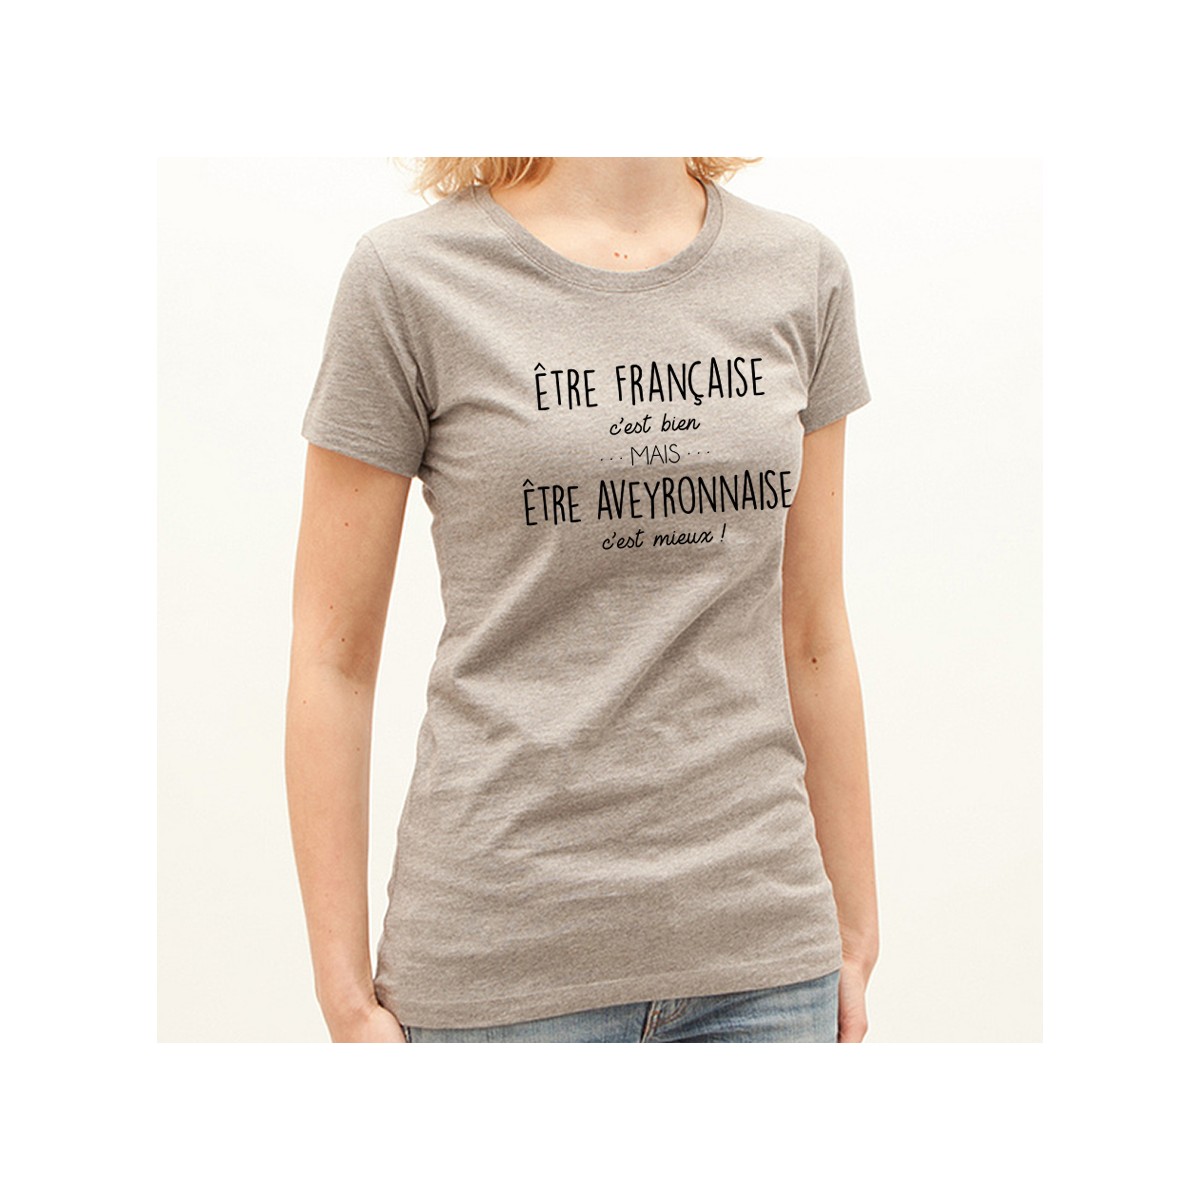 T-shirt Être Aveyronnaise c'est mieux